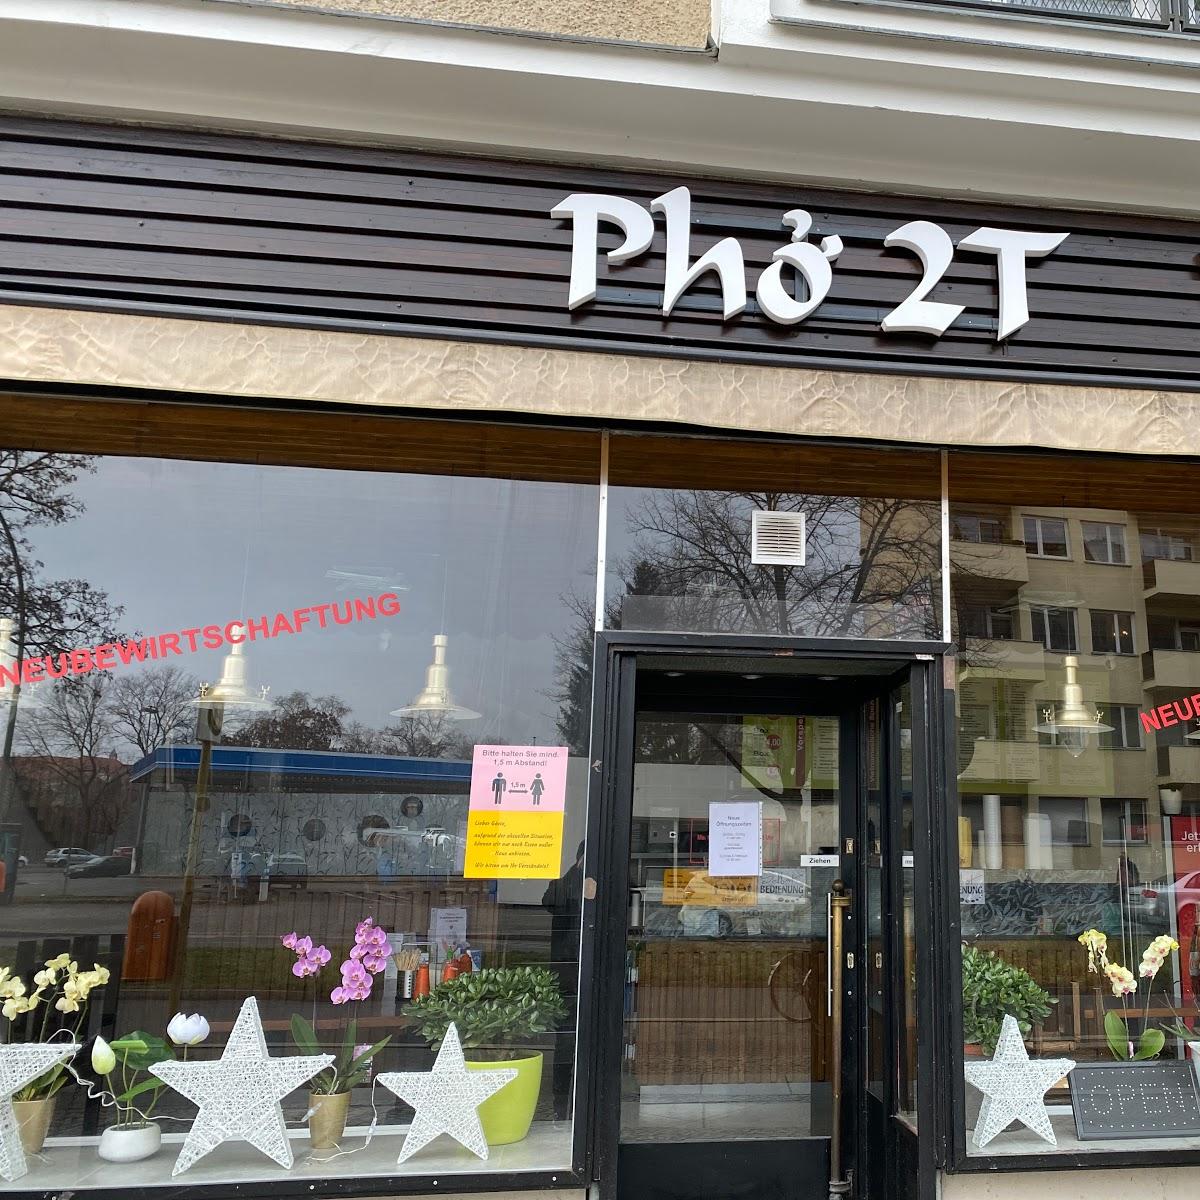 Restaurant "Pho 2T" in Berlin